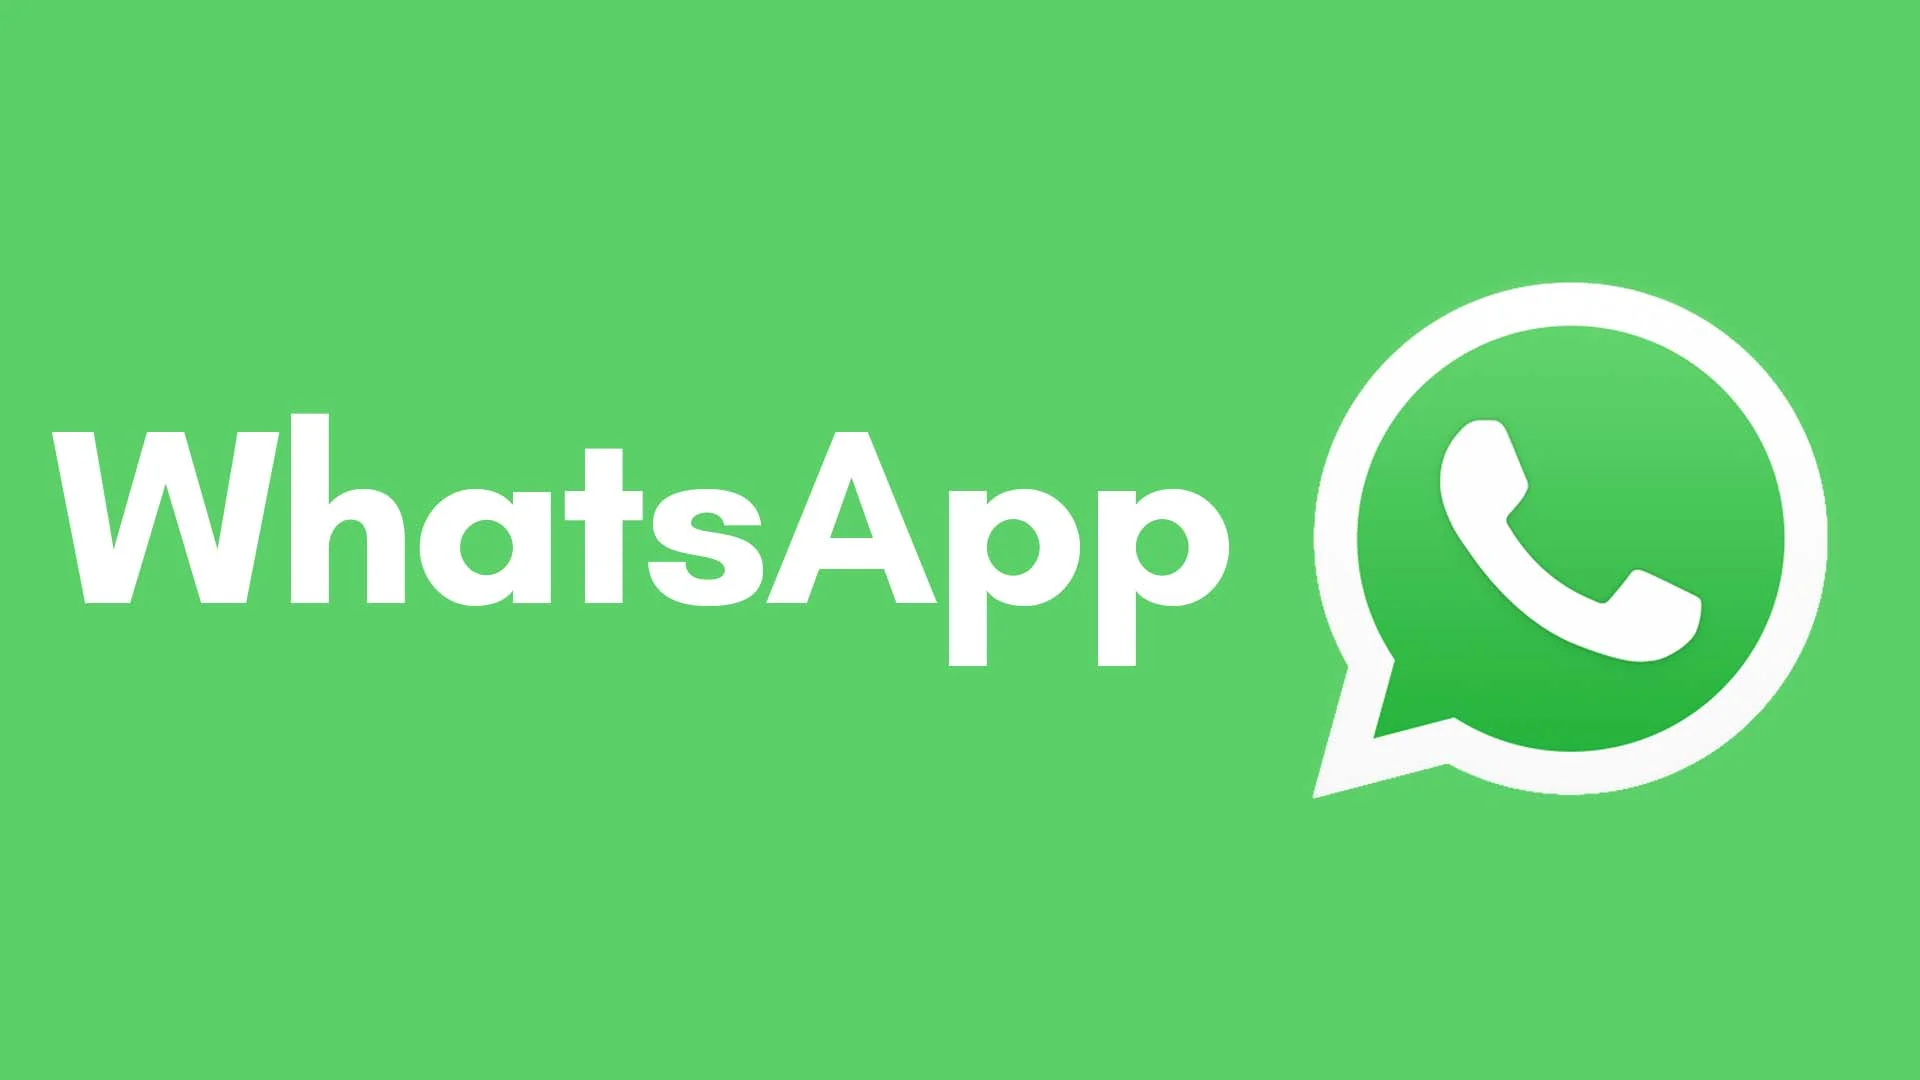 WhatsApp Seeker Filtering Software Targeted Finding Users